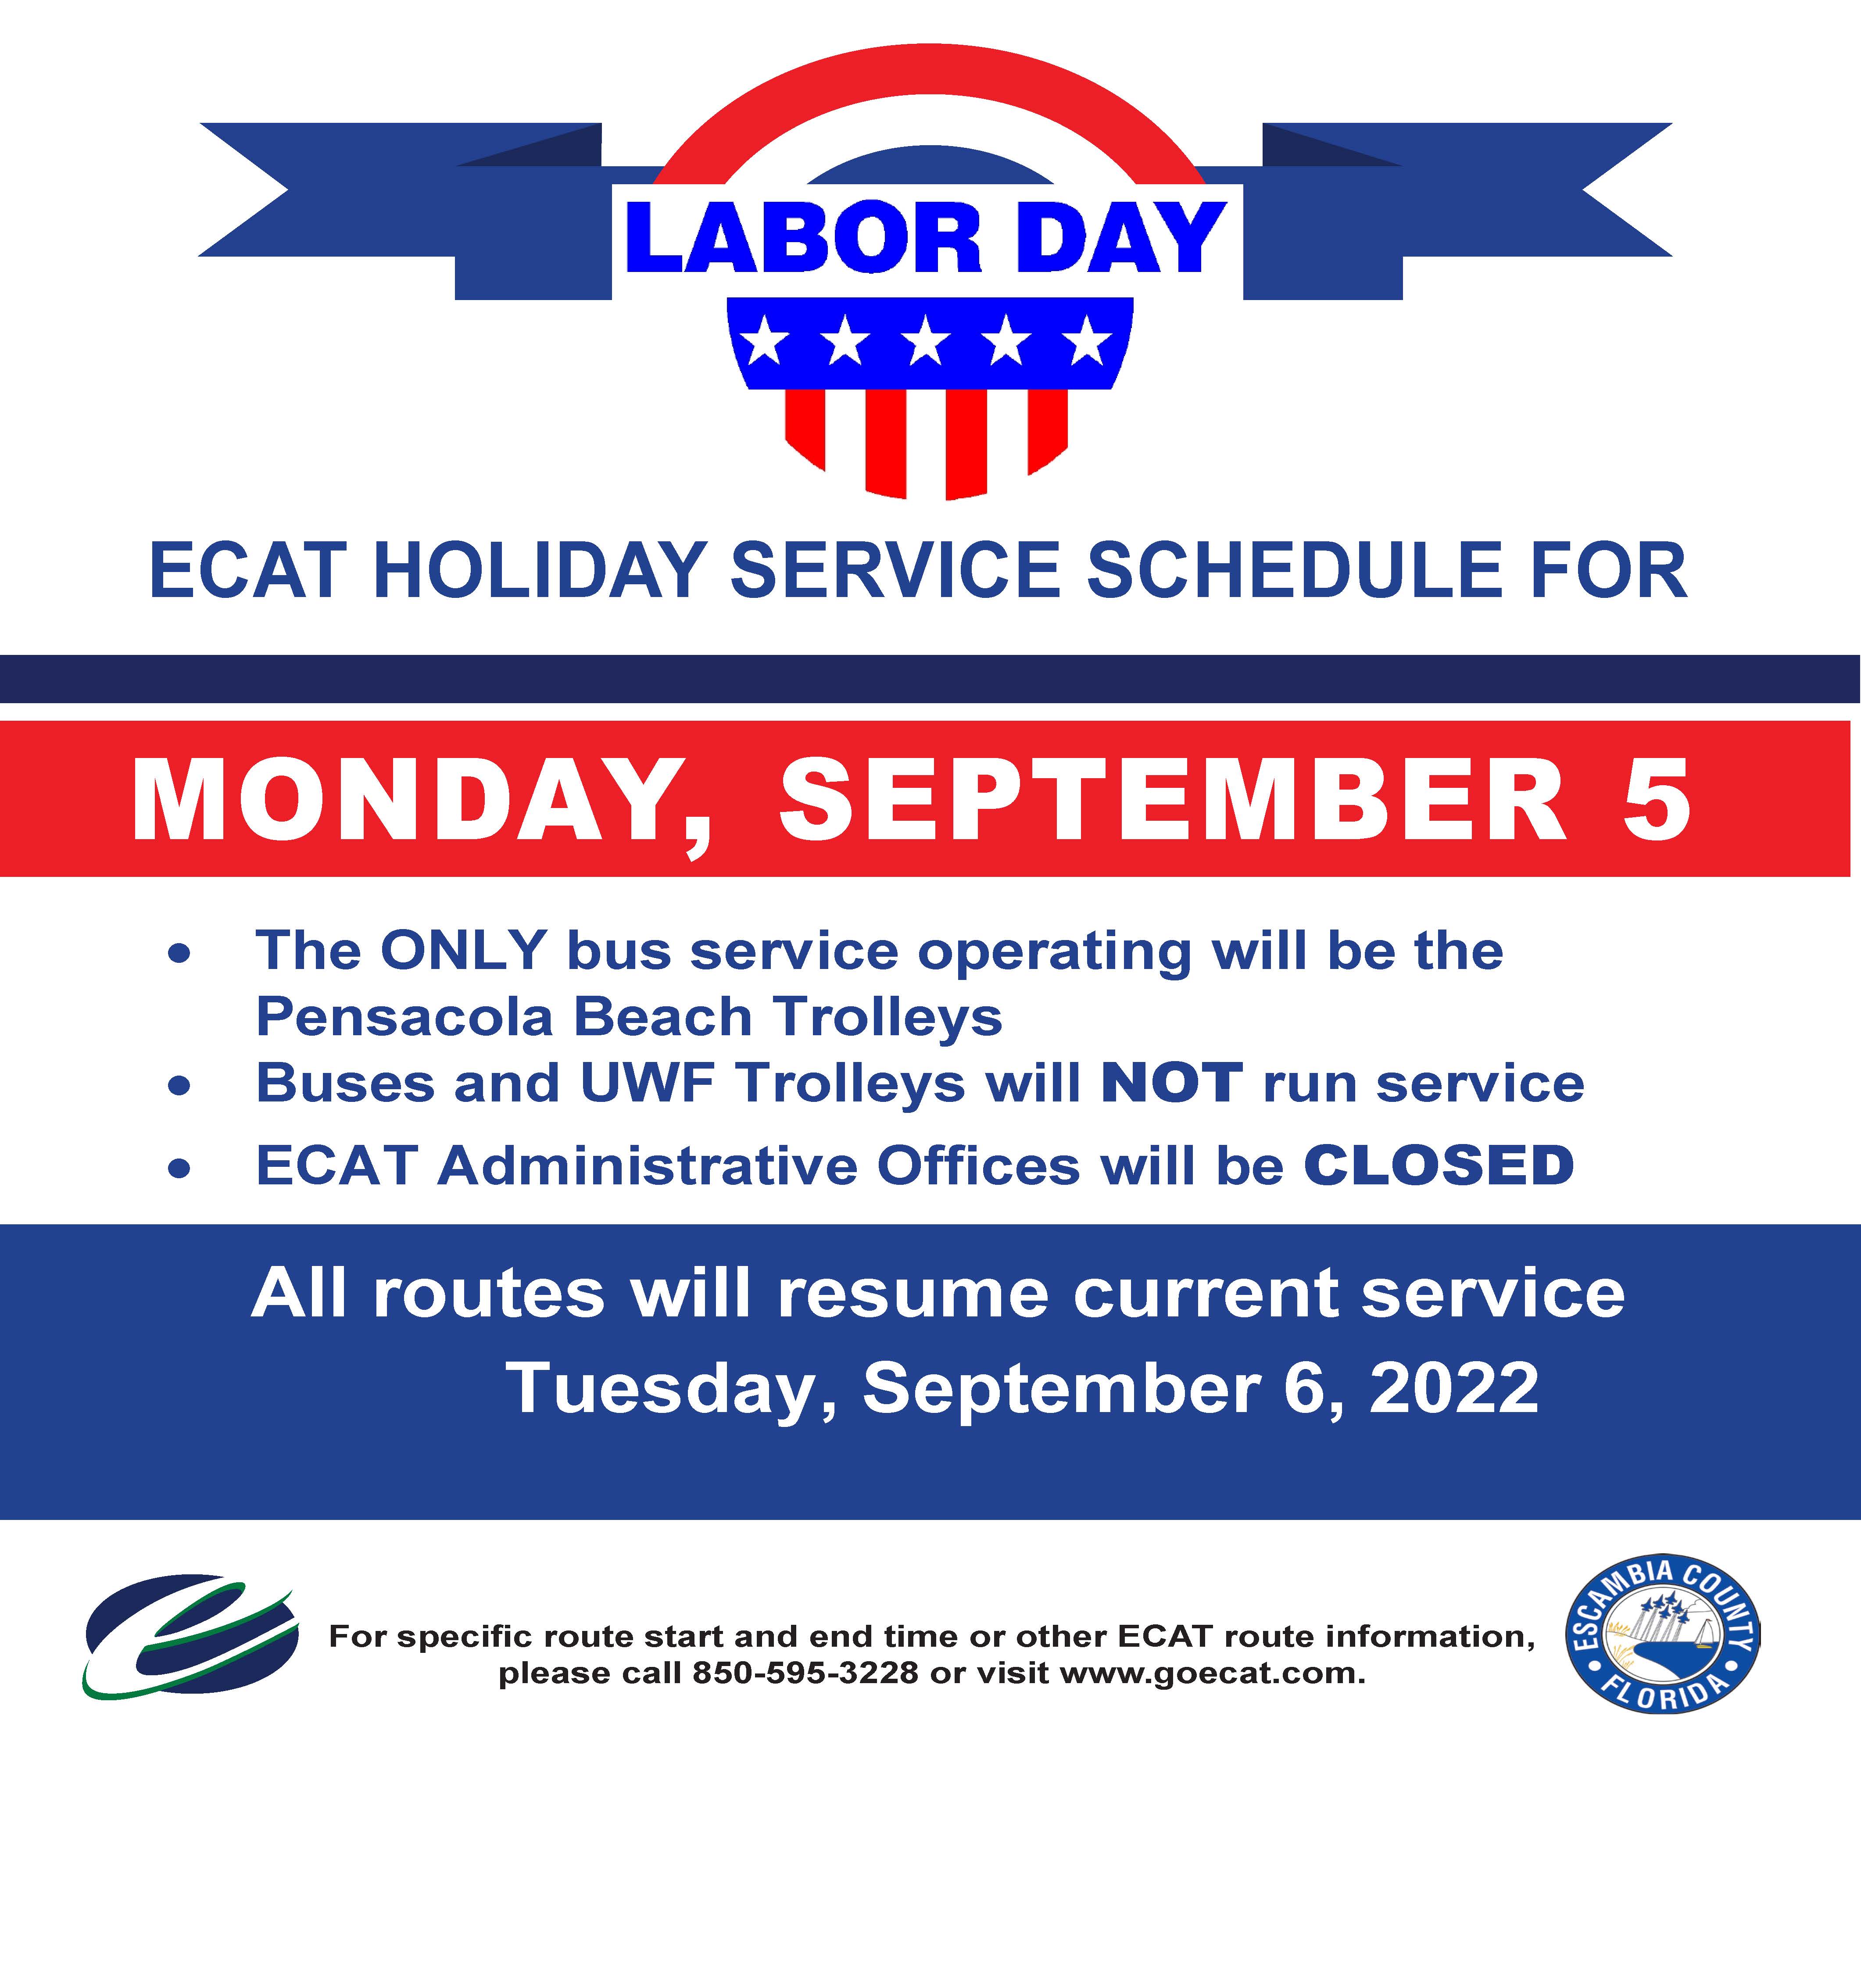 Labor Day closures for ECAT